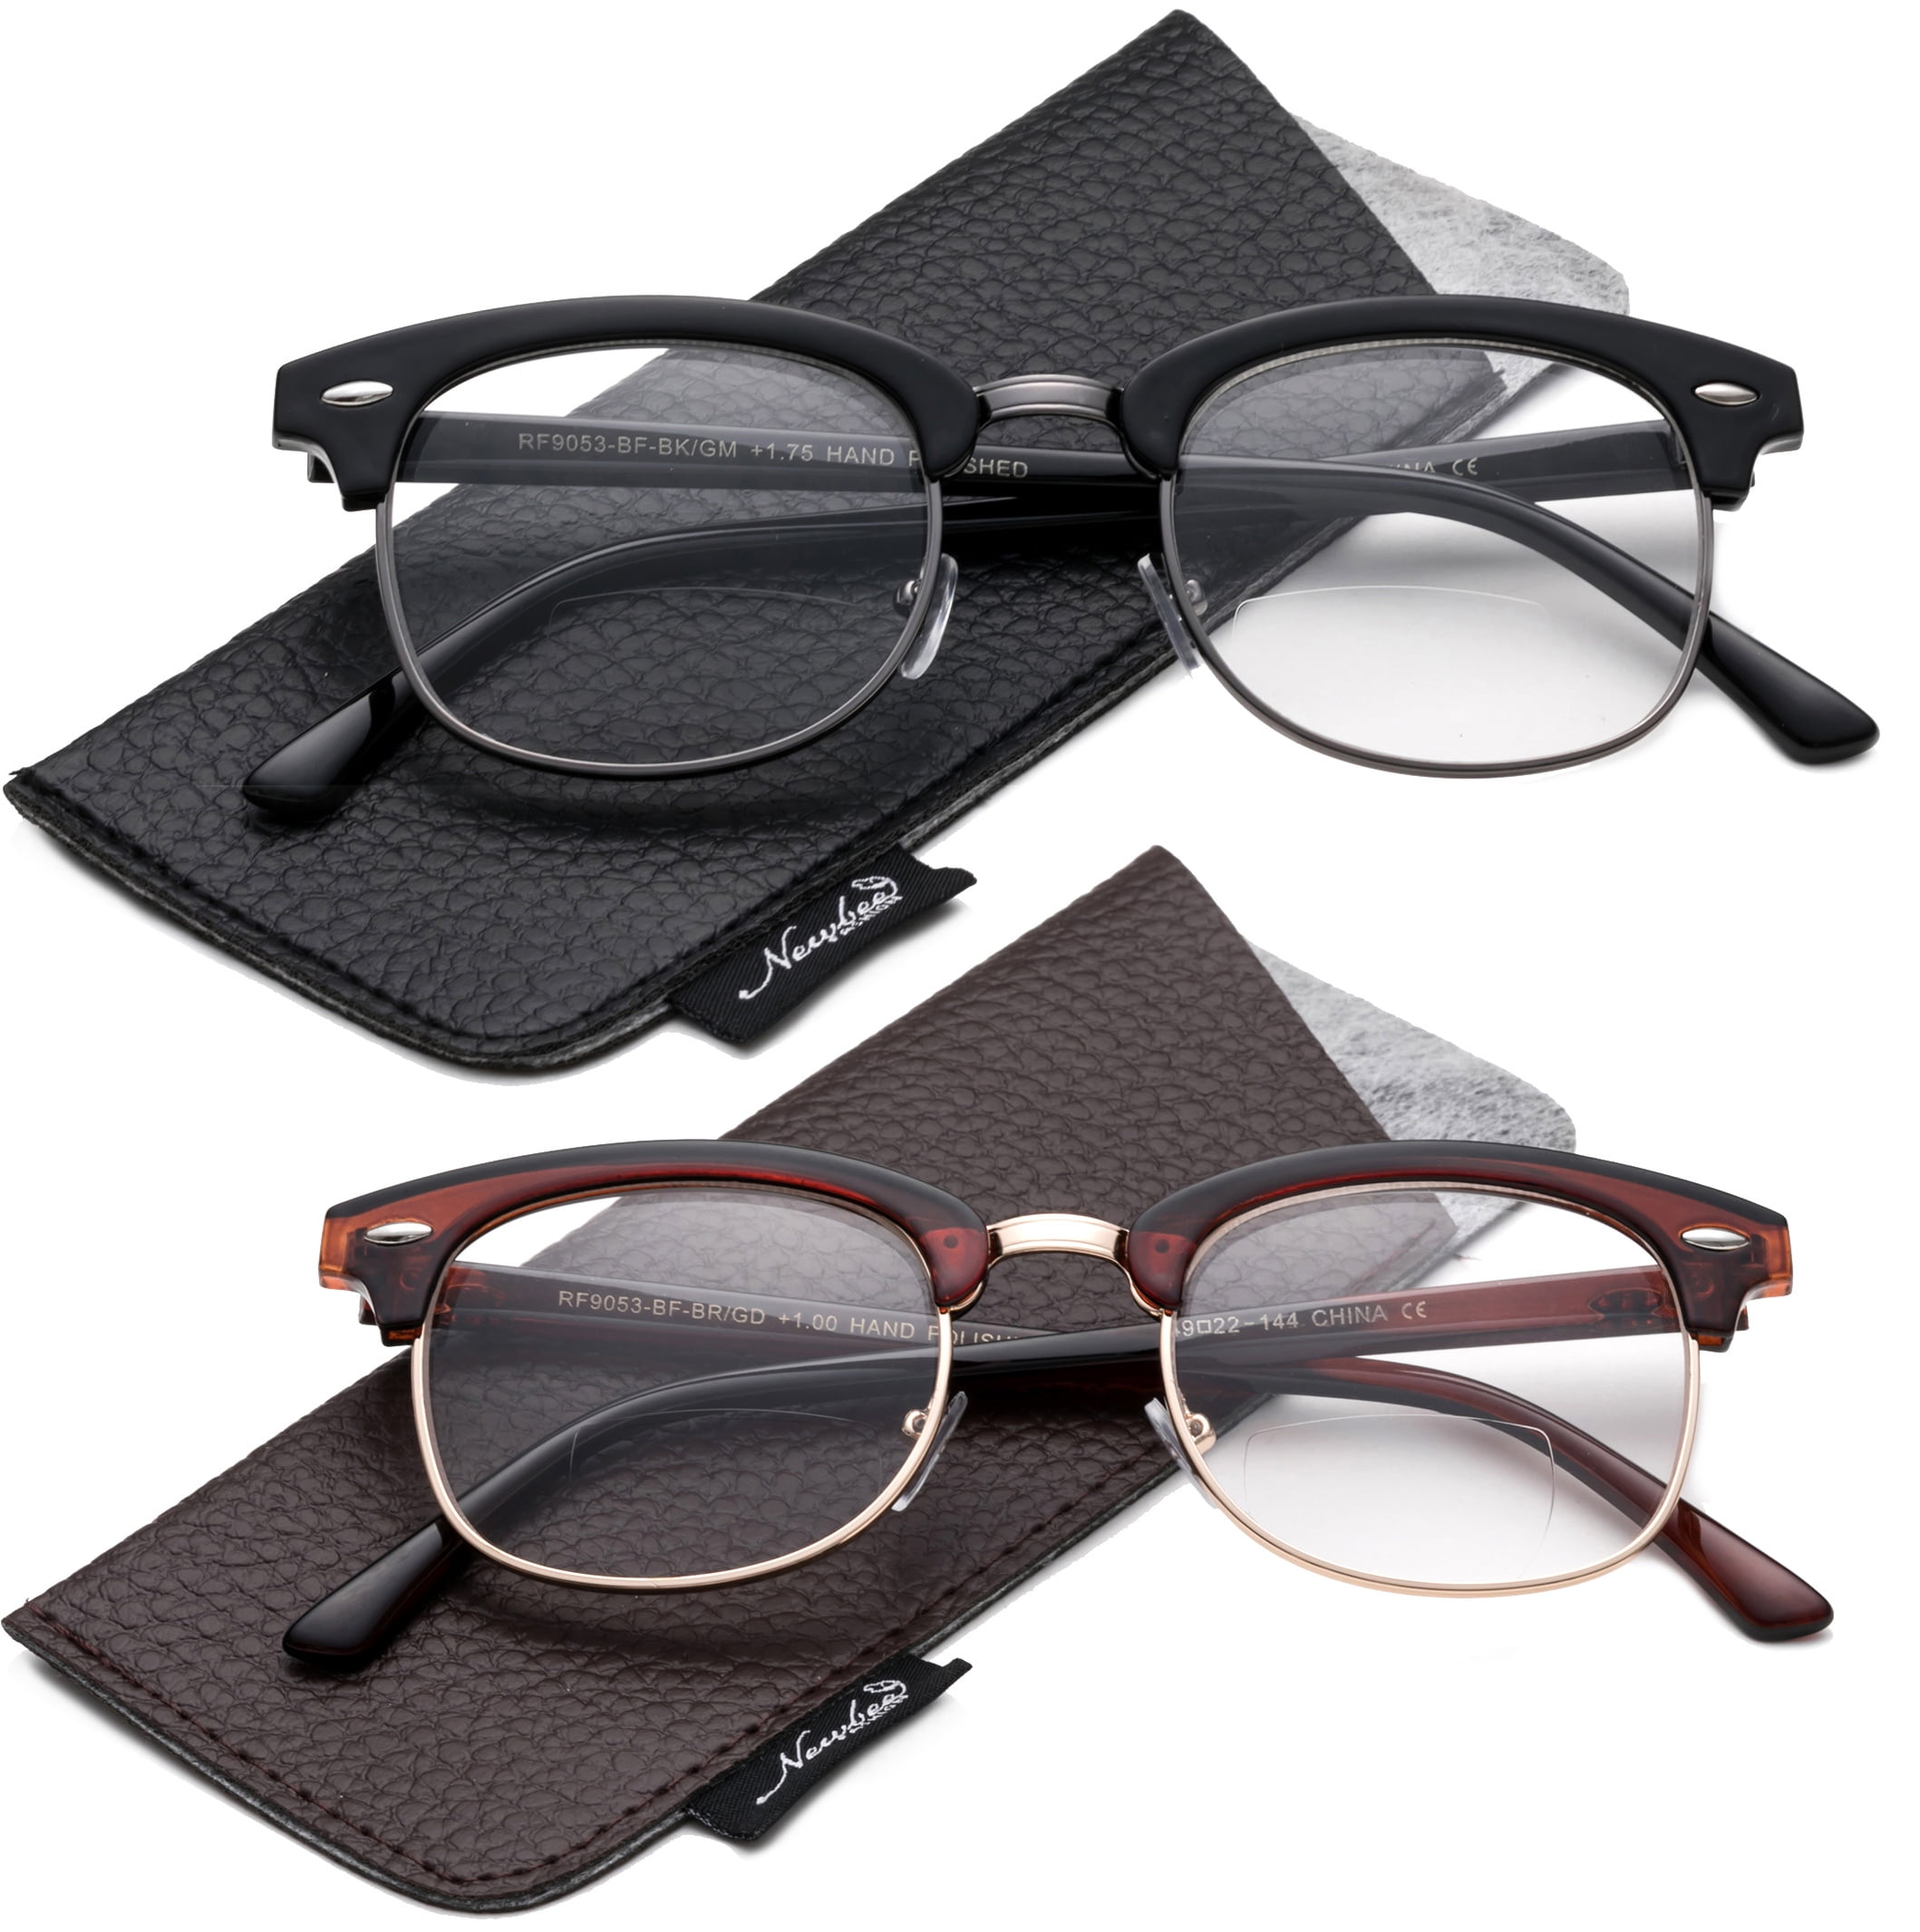 2 Packs Bifocal Reading Glasses Half Frame Vintage Retro Stylish And Fashion Reading Glasses